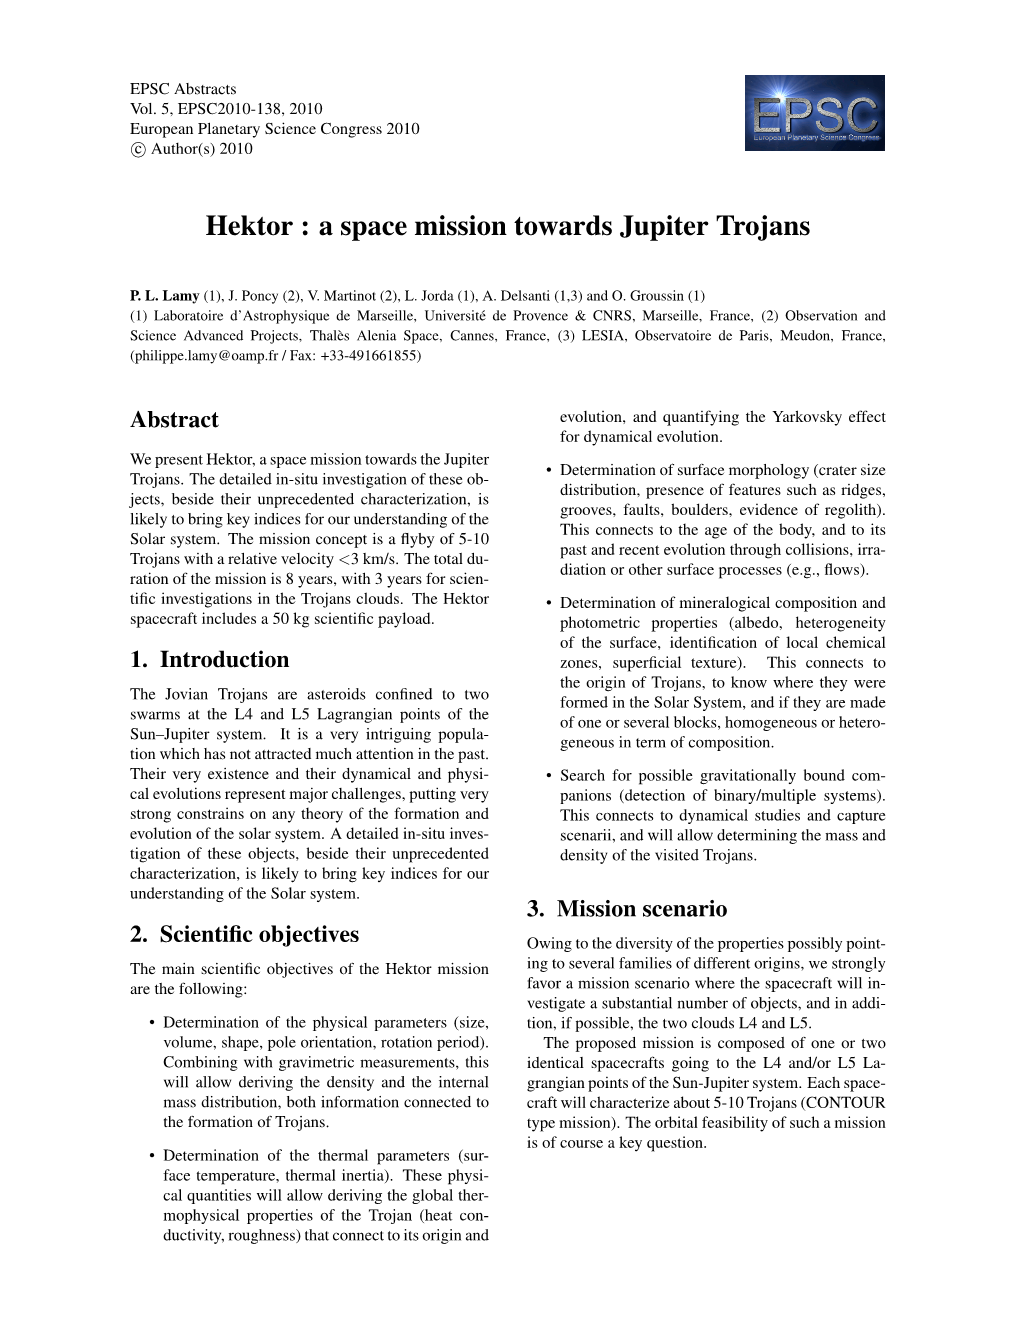 Hektor : a Space Mission Towards Jupiter Trojans